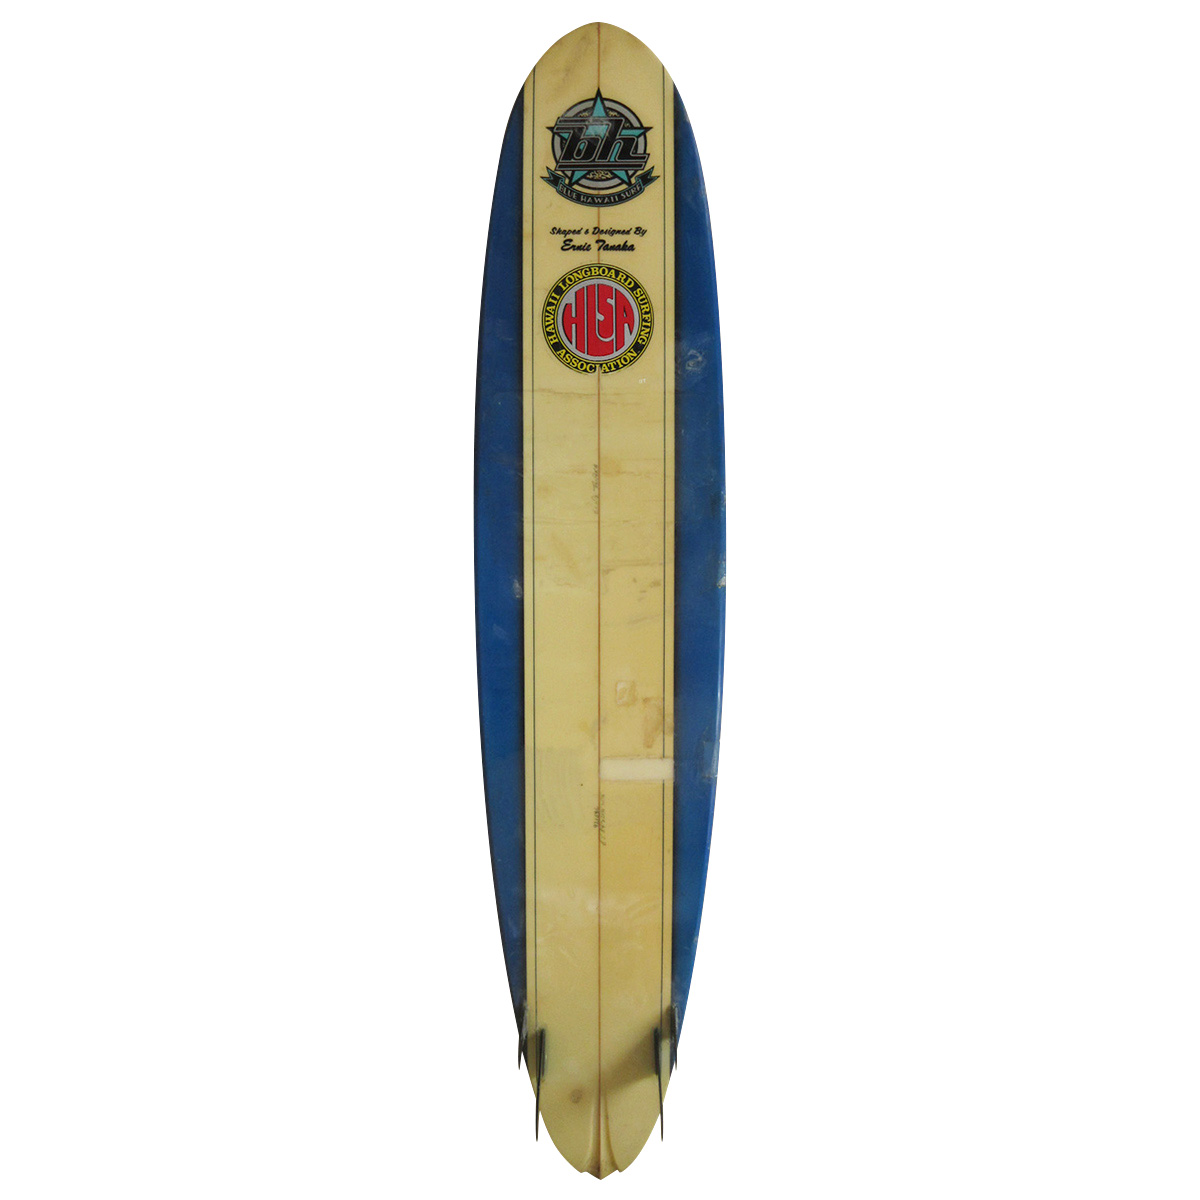 BLUE HAWAII SURFBOARDS / TWINZER 8'4 Shaped by Ernie Tanaka